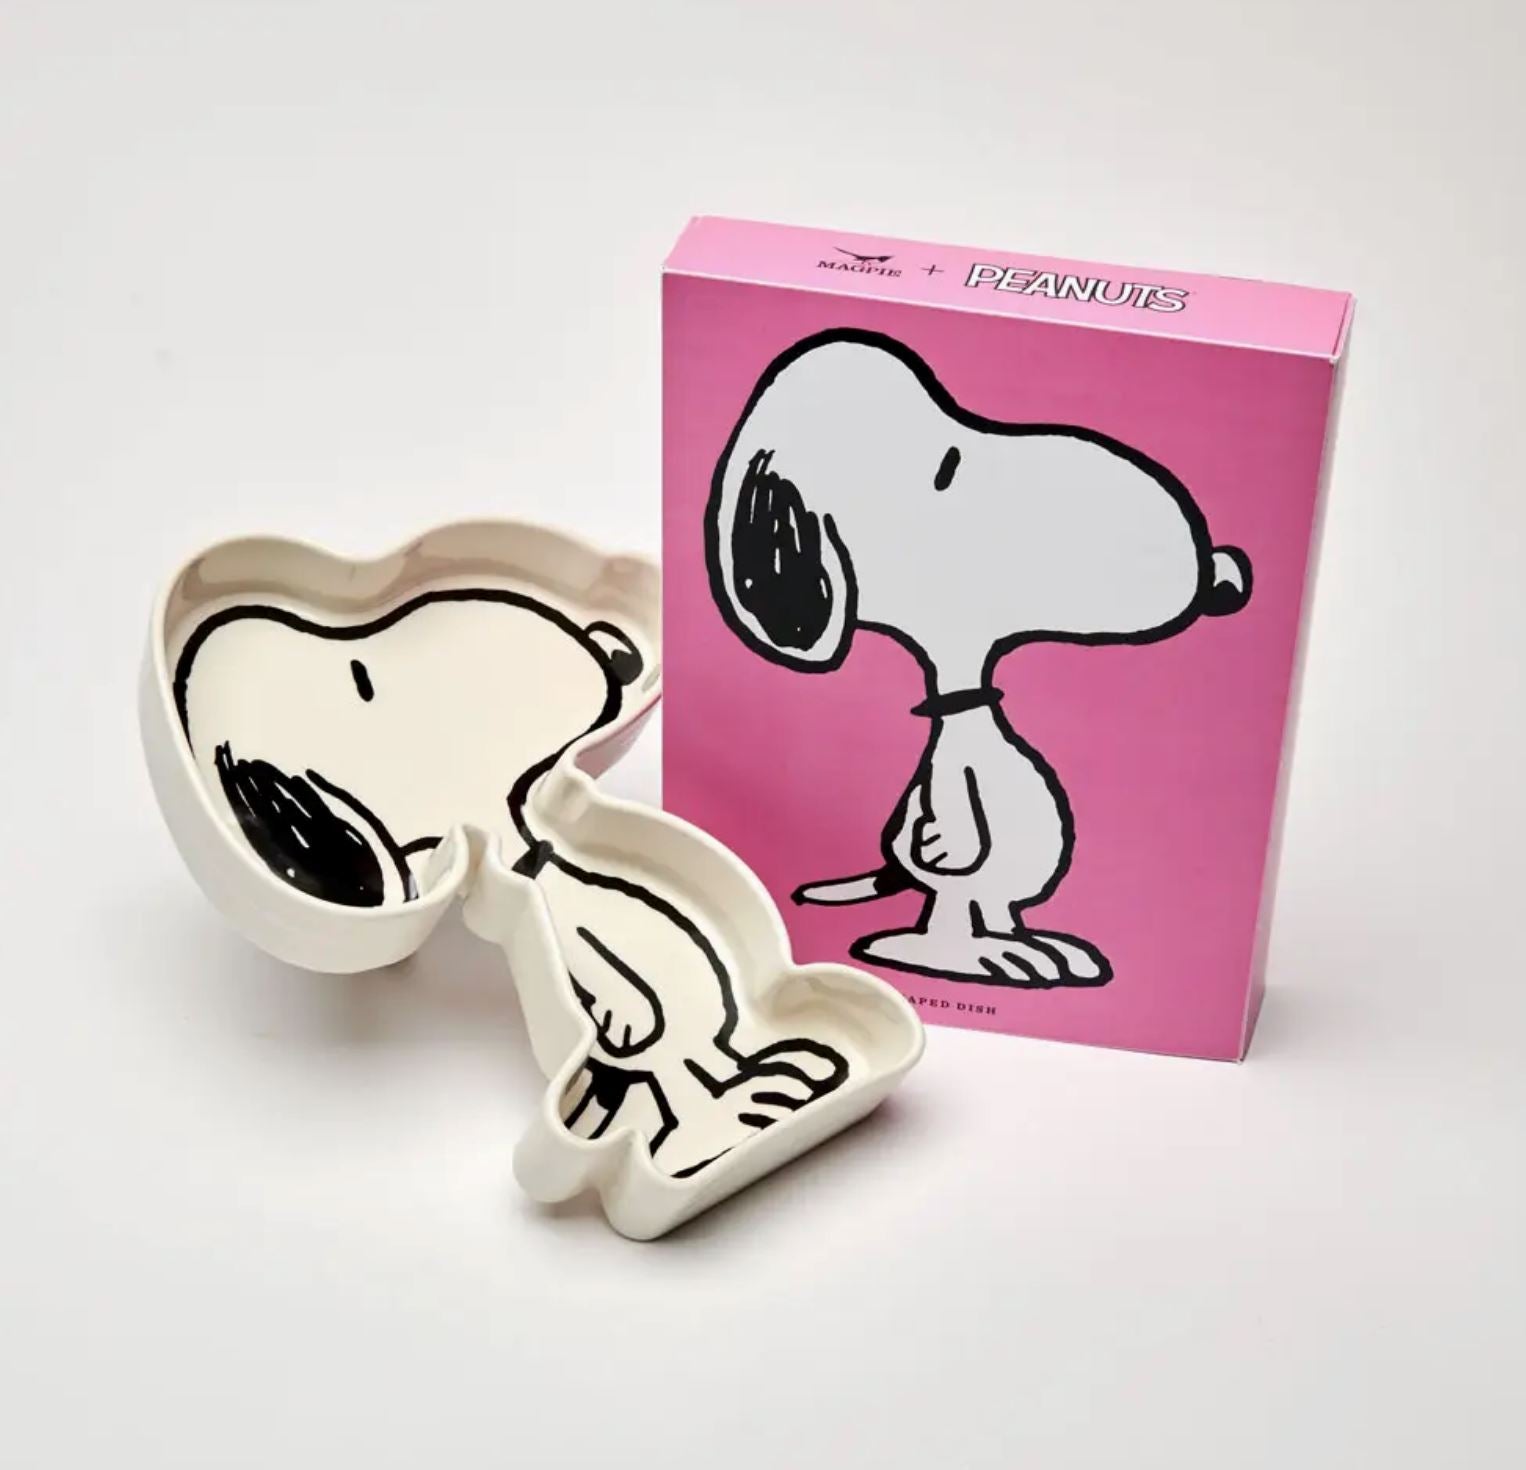 Peanuts Snoopy Trinket Tray x Magpie - Third Drawer Down